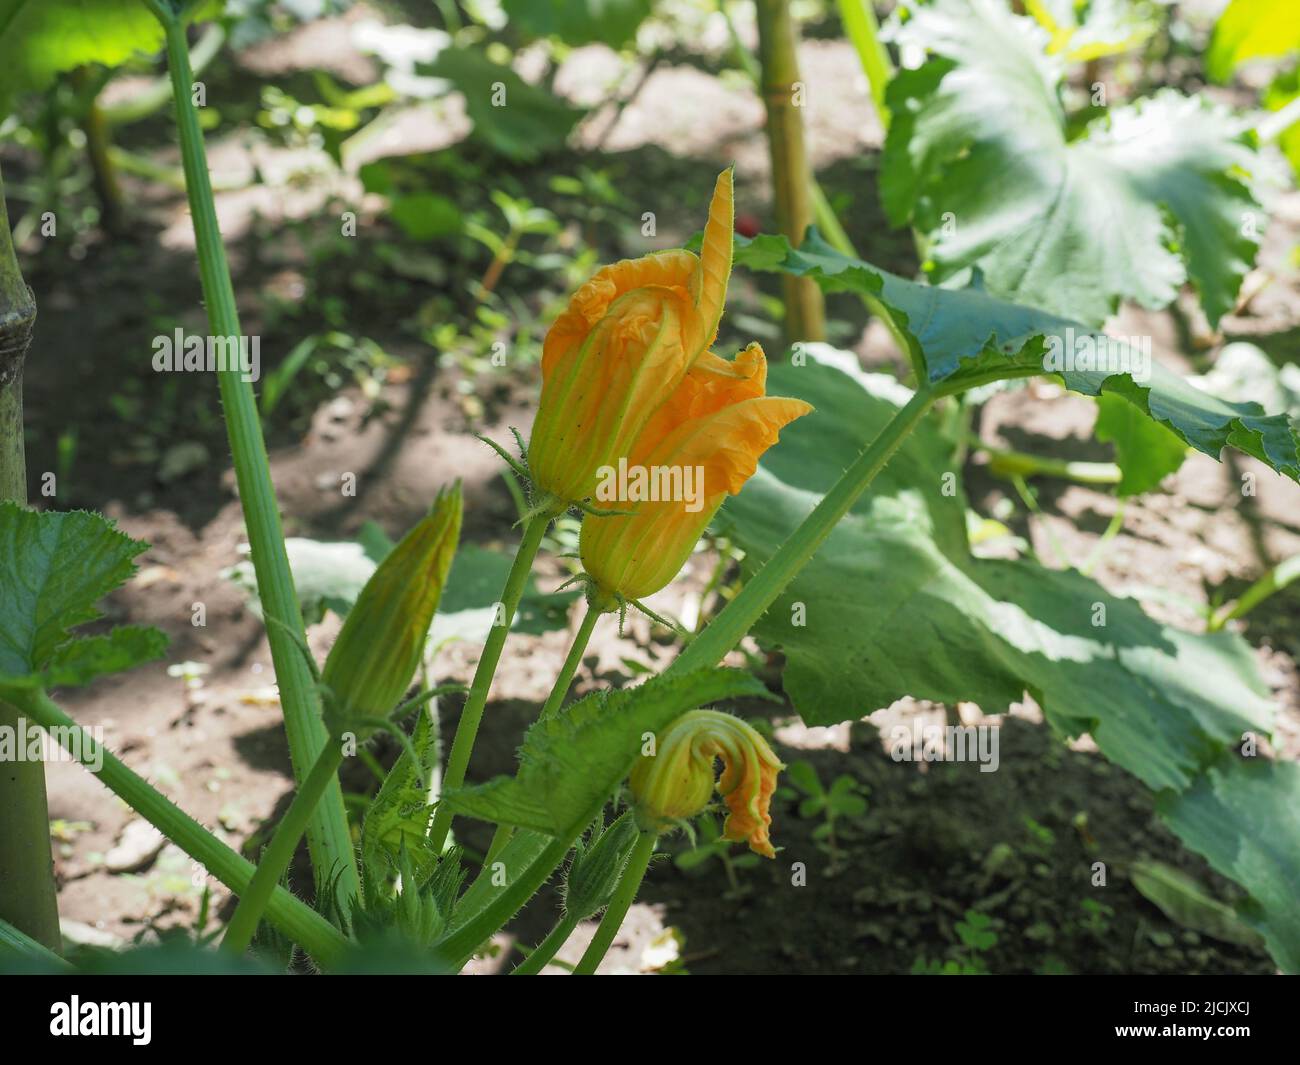 zucchini scientific name Cucurbita pepo aka courgettes plant with yellow flower Stock Photo